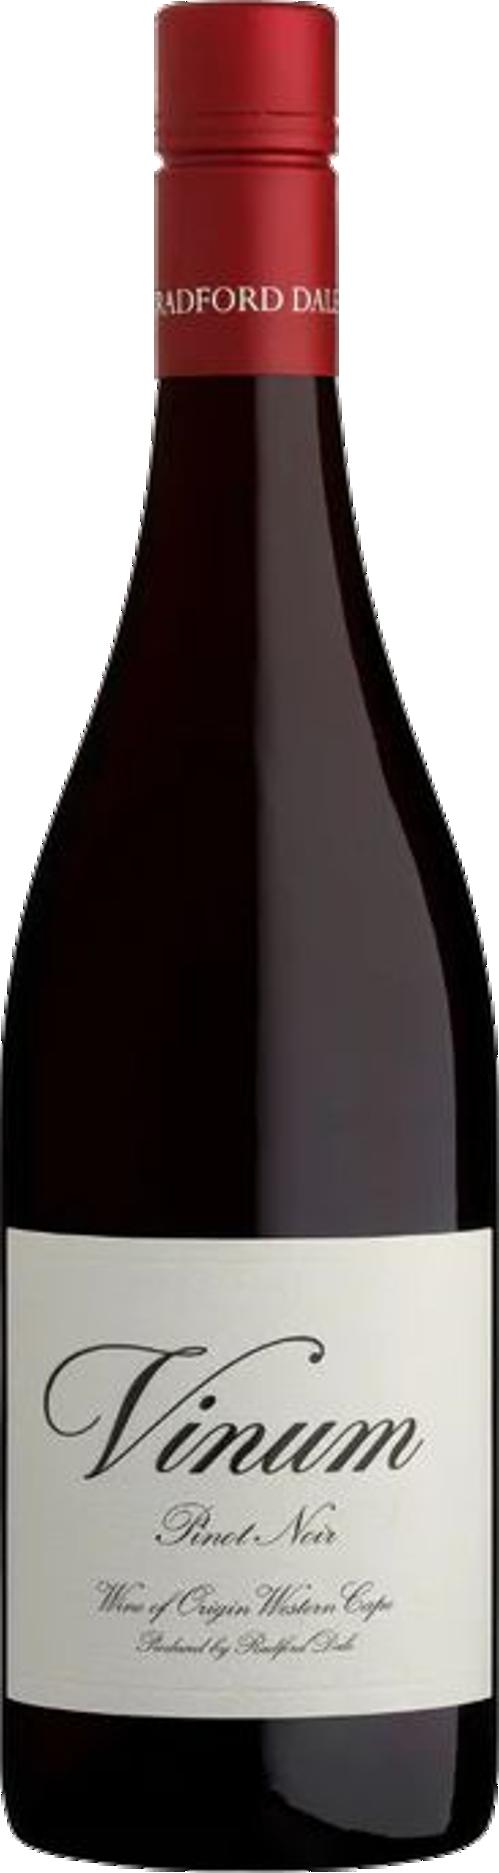 Radford Dale Vinum Pinot Noir 2021